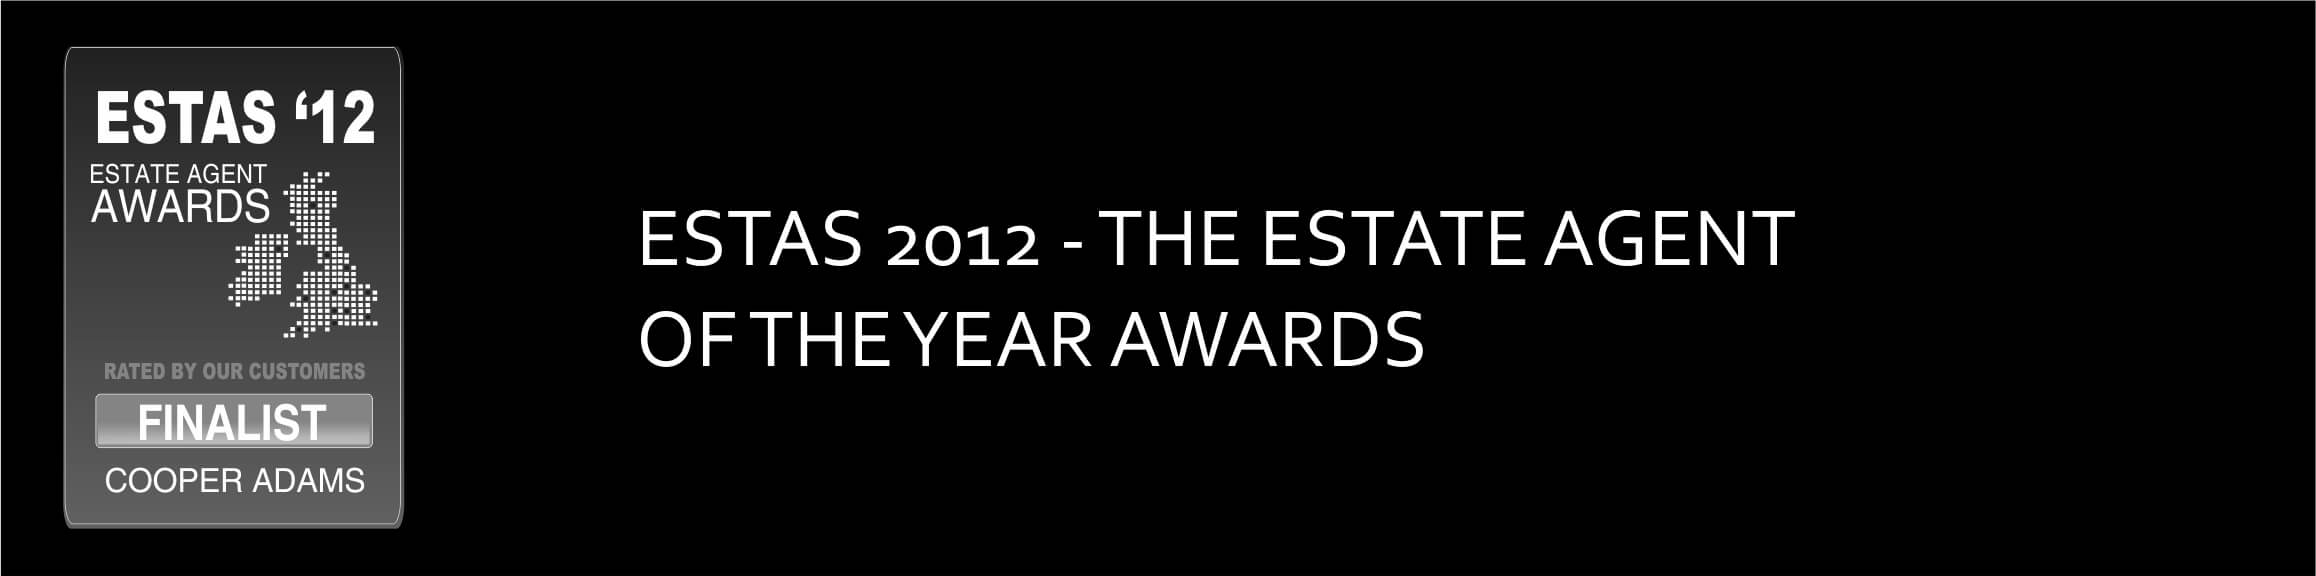 ESTAS Estate Agent of the Year Awards 2012